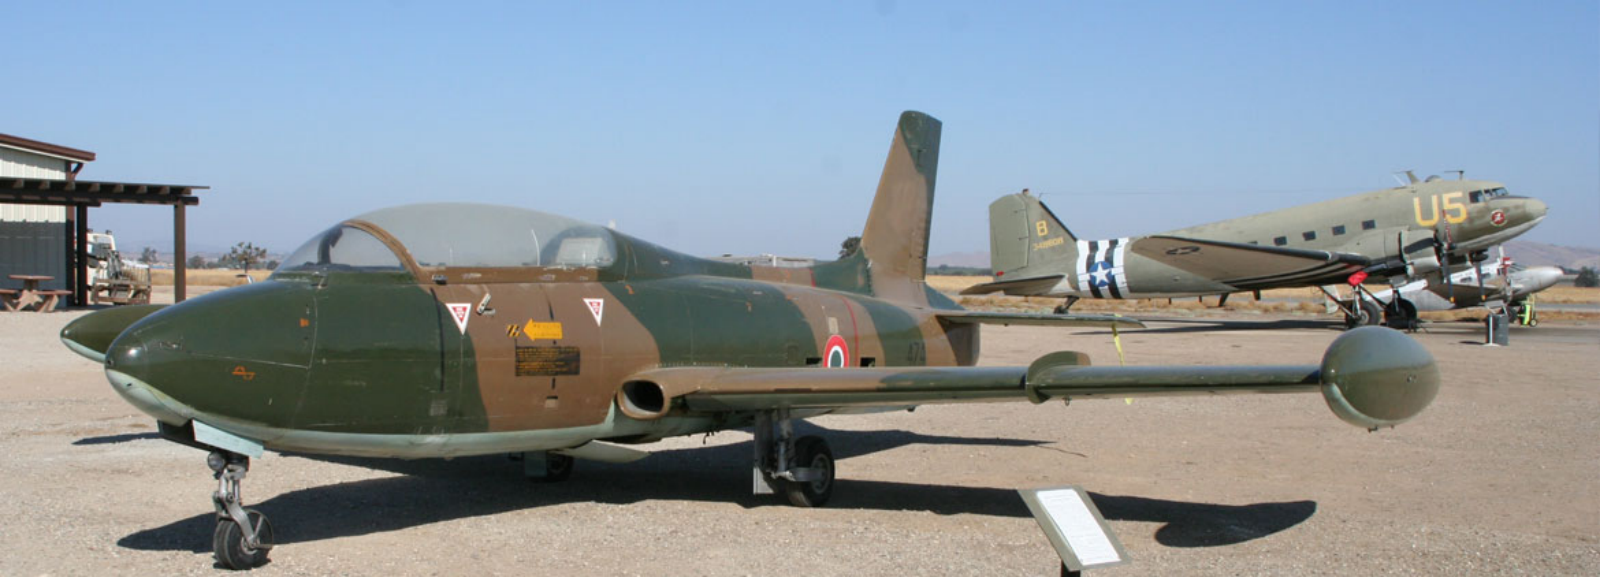 Saab A-32 Lansen